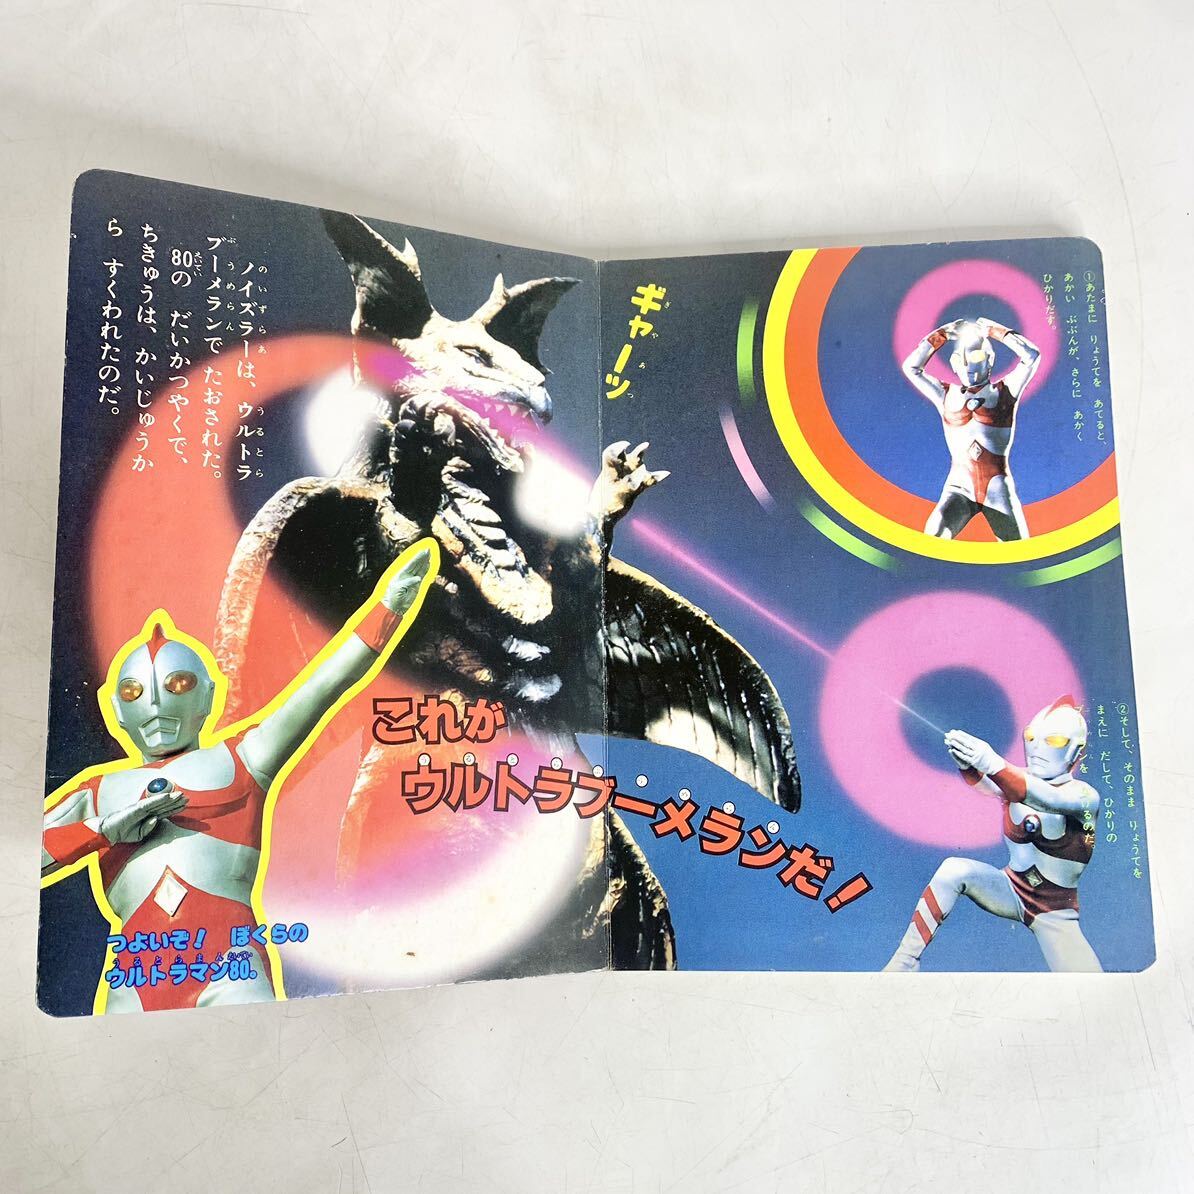  Showa Retro Ultraman 80 ③..!! Ultra boomerang Shogakukan Inc.. tv picture book jpy . Pro 1980 Showa era 55 year secondhand book picture book ... that time thing 